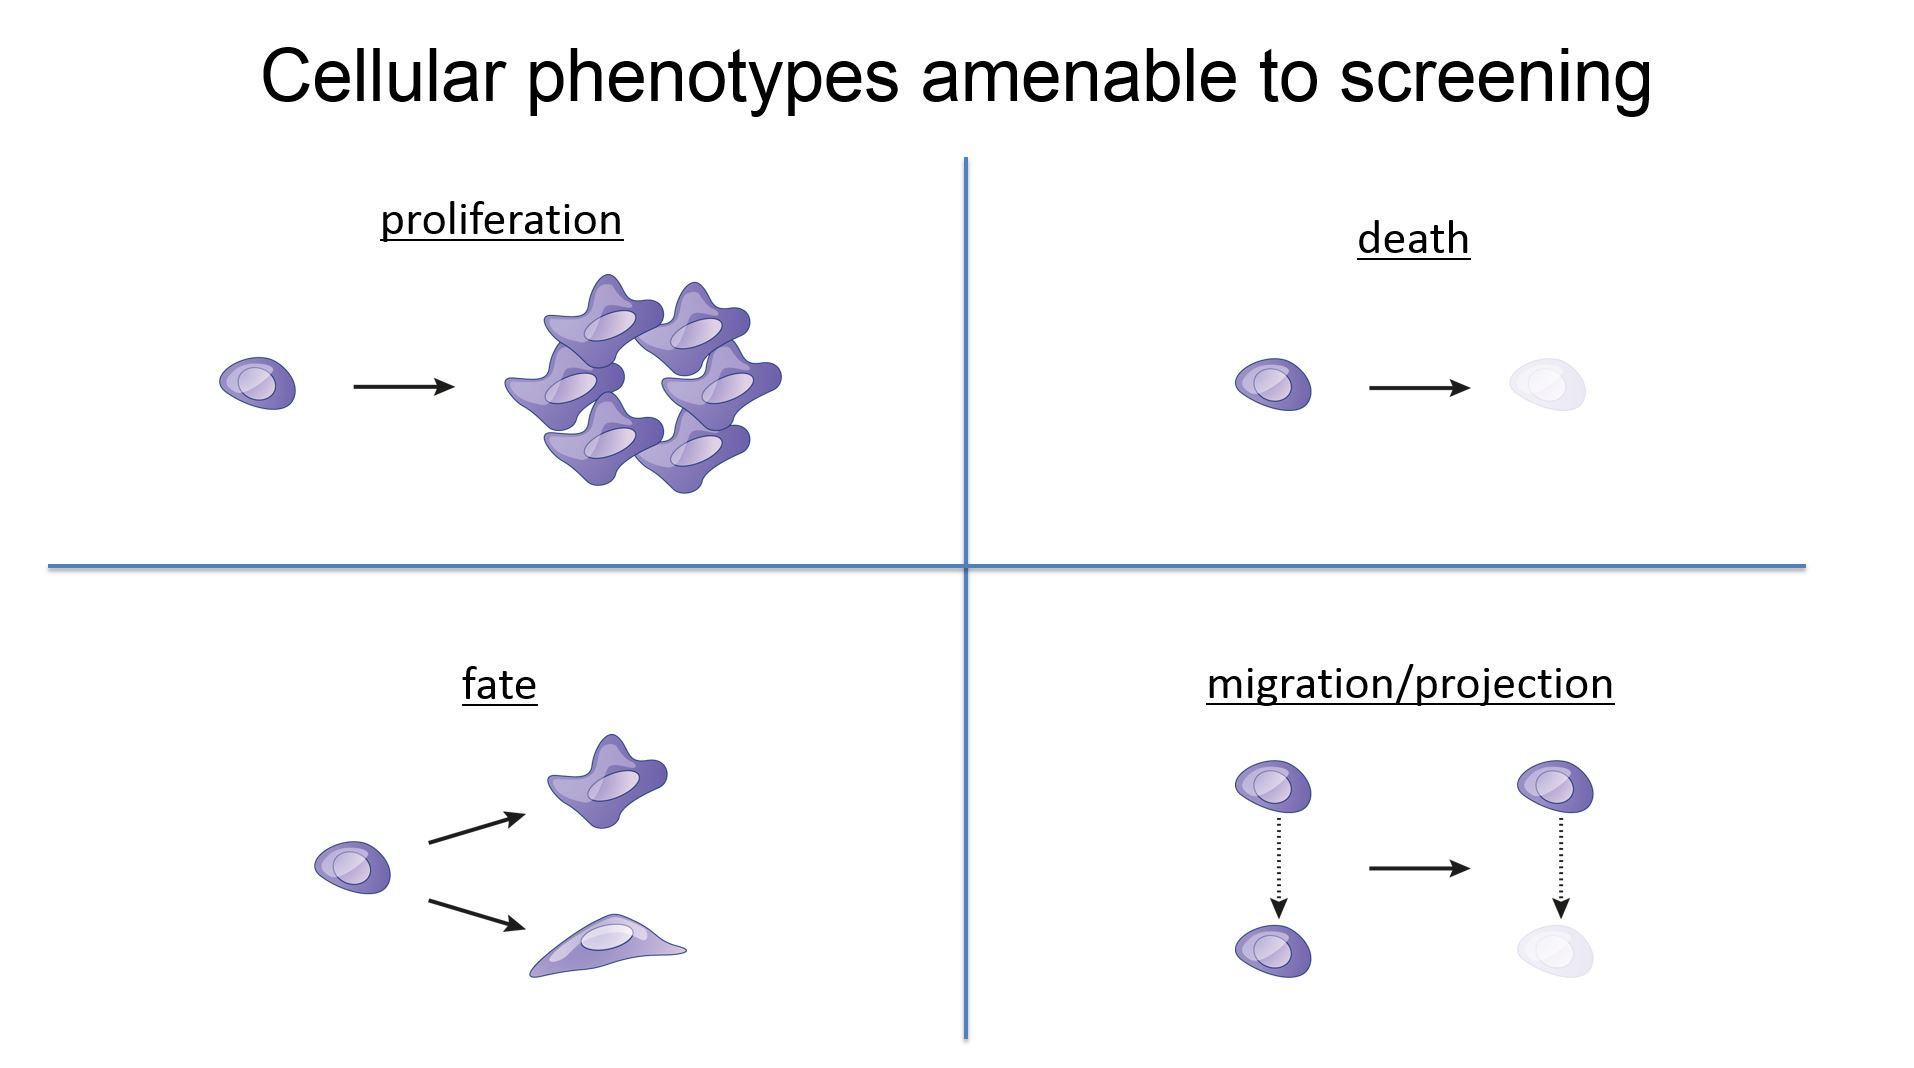 Cellular phenotypes amenable to screening